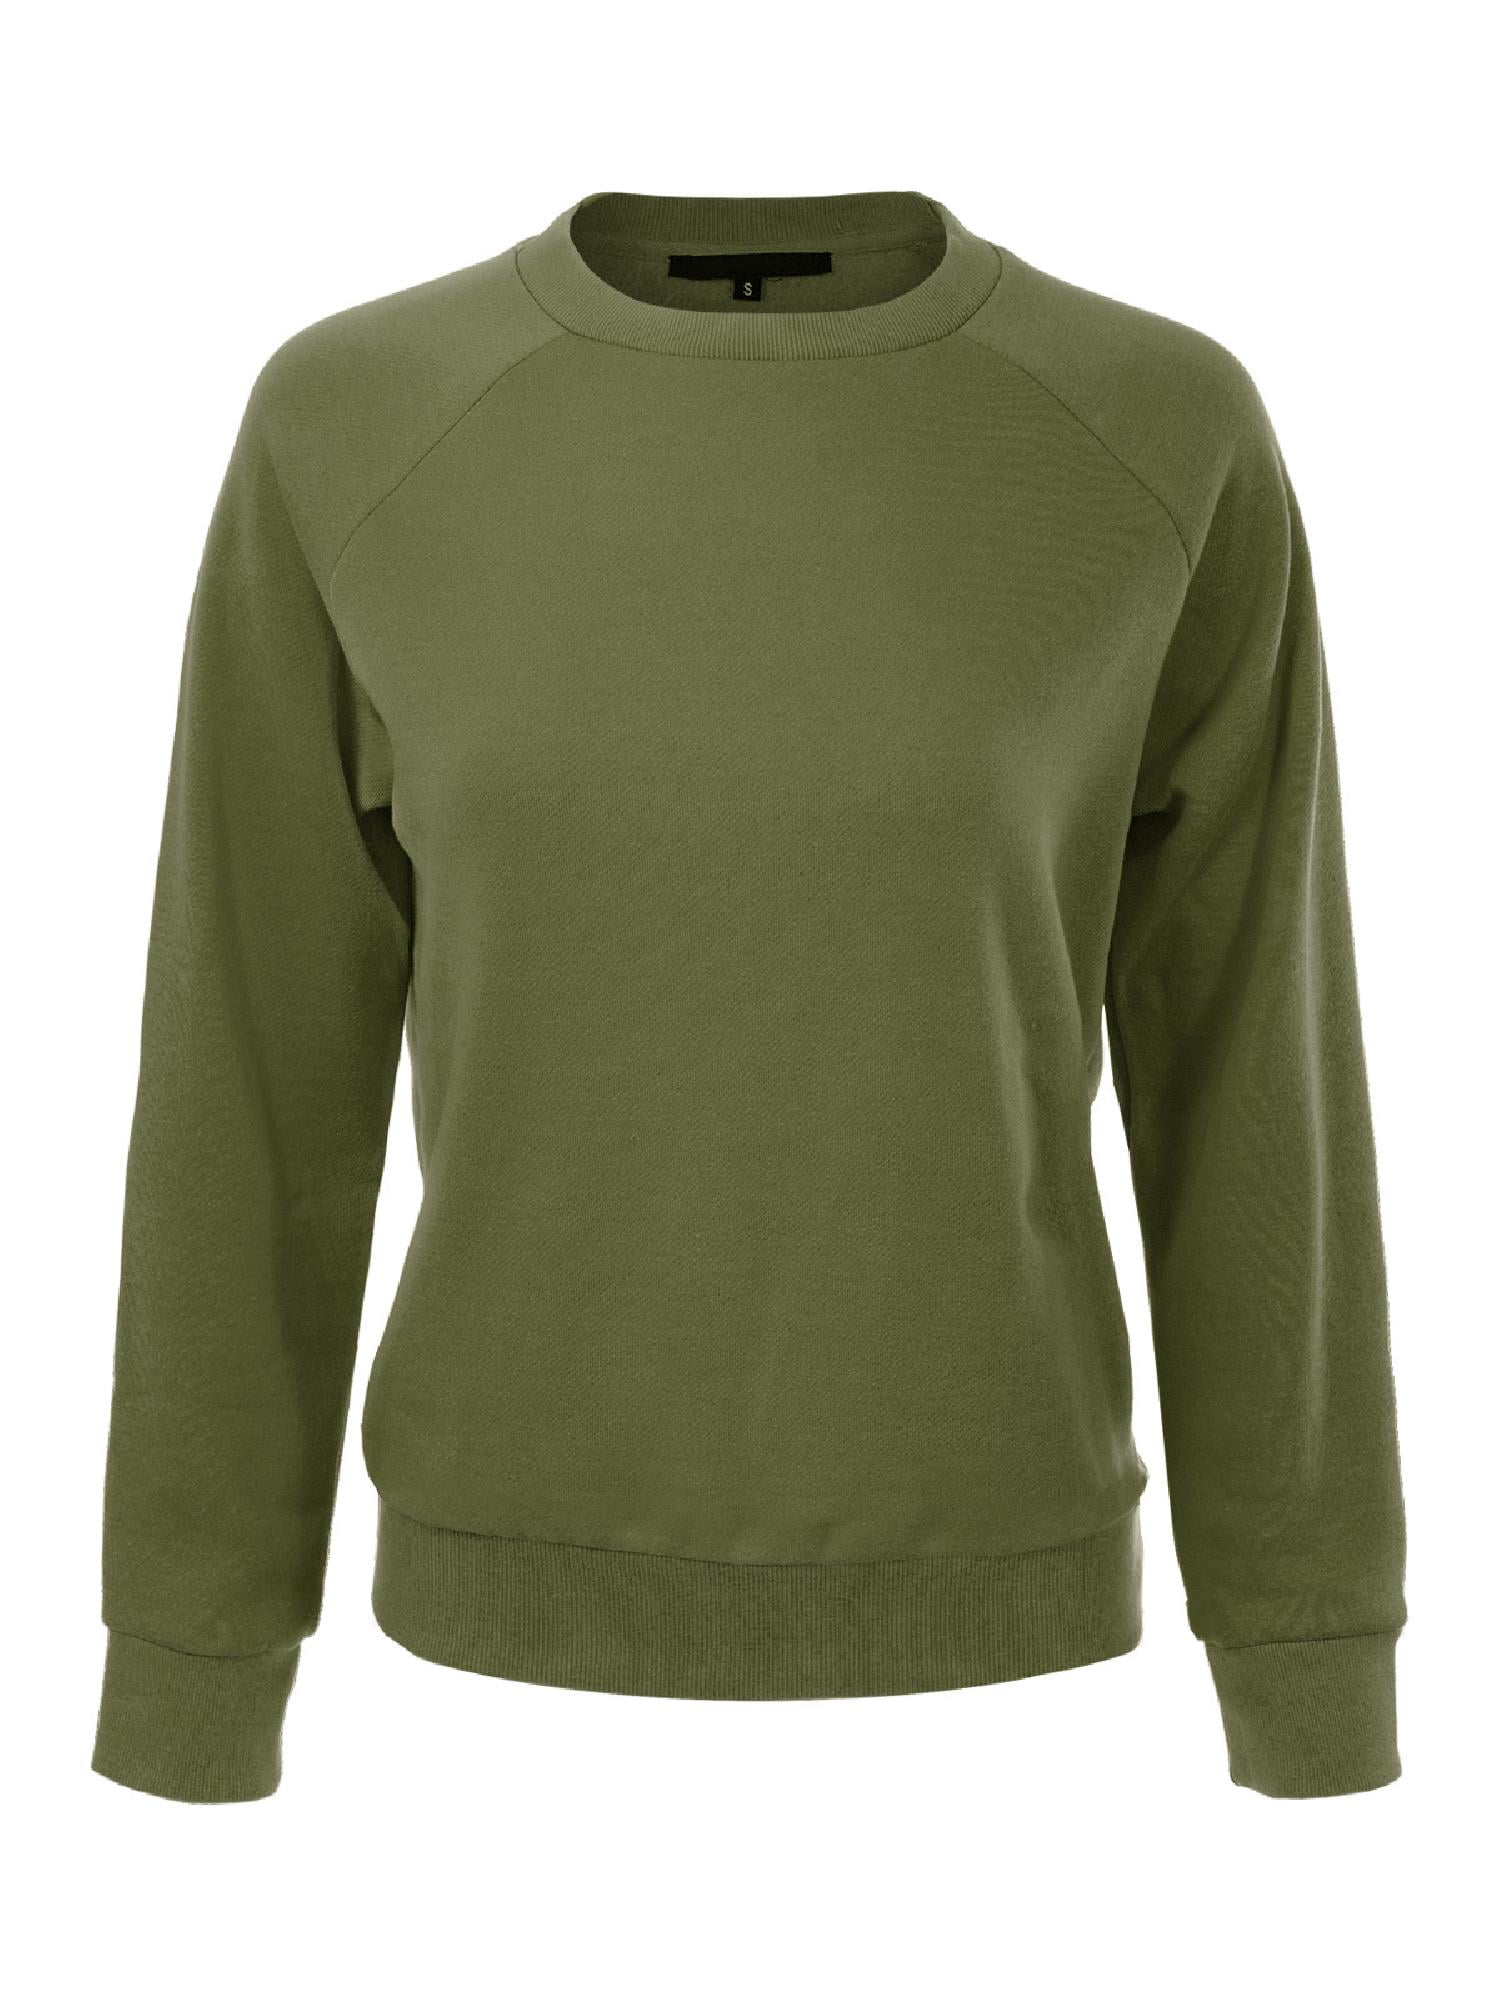 MixMatchy Womens Soft and Comfy Basic Pullover Crewneck Fleece Sweatshirt 